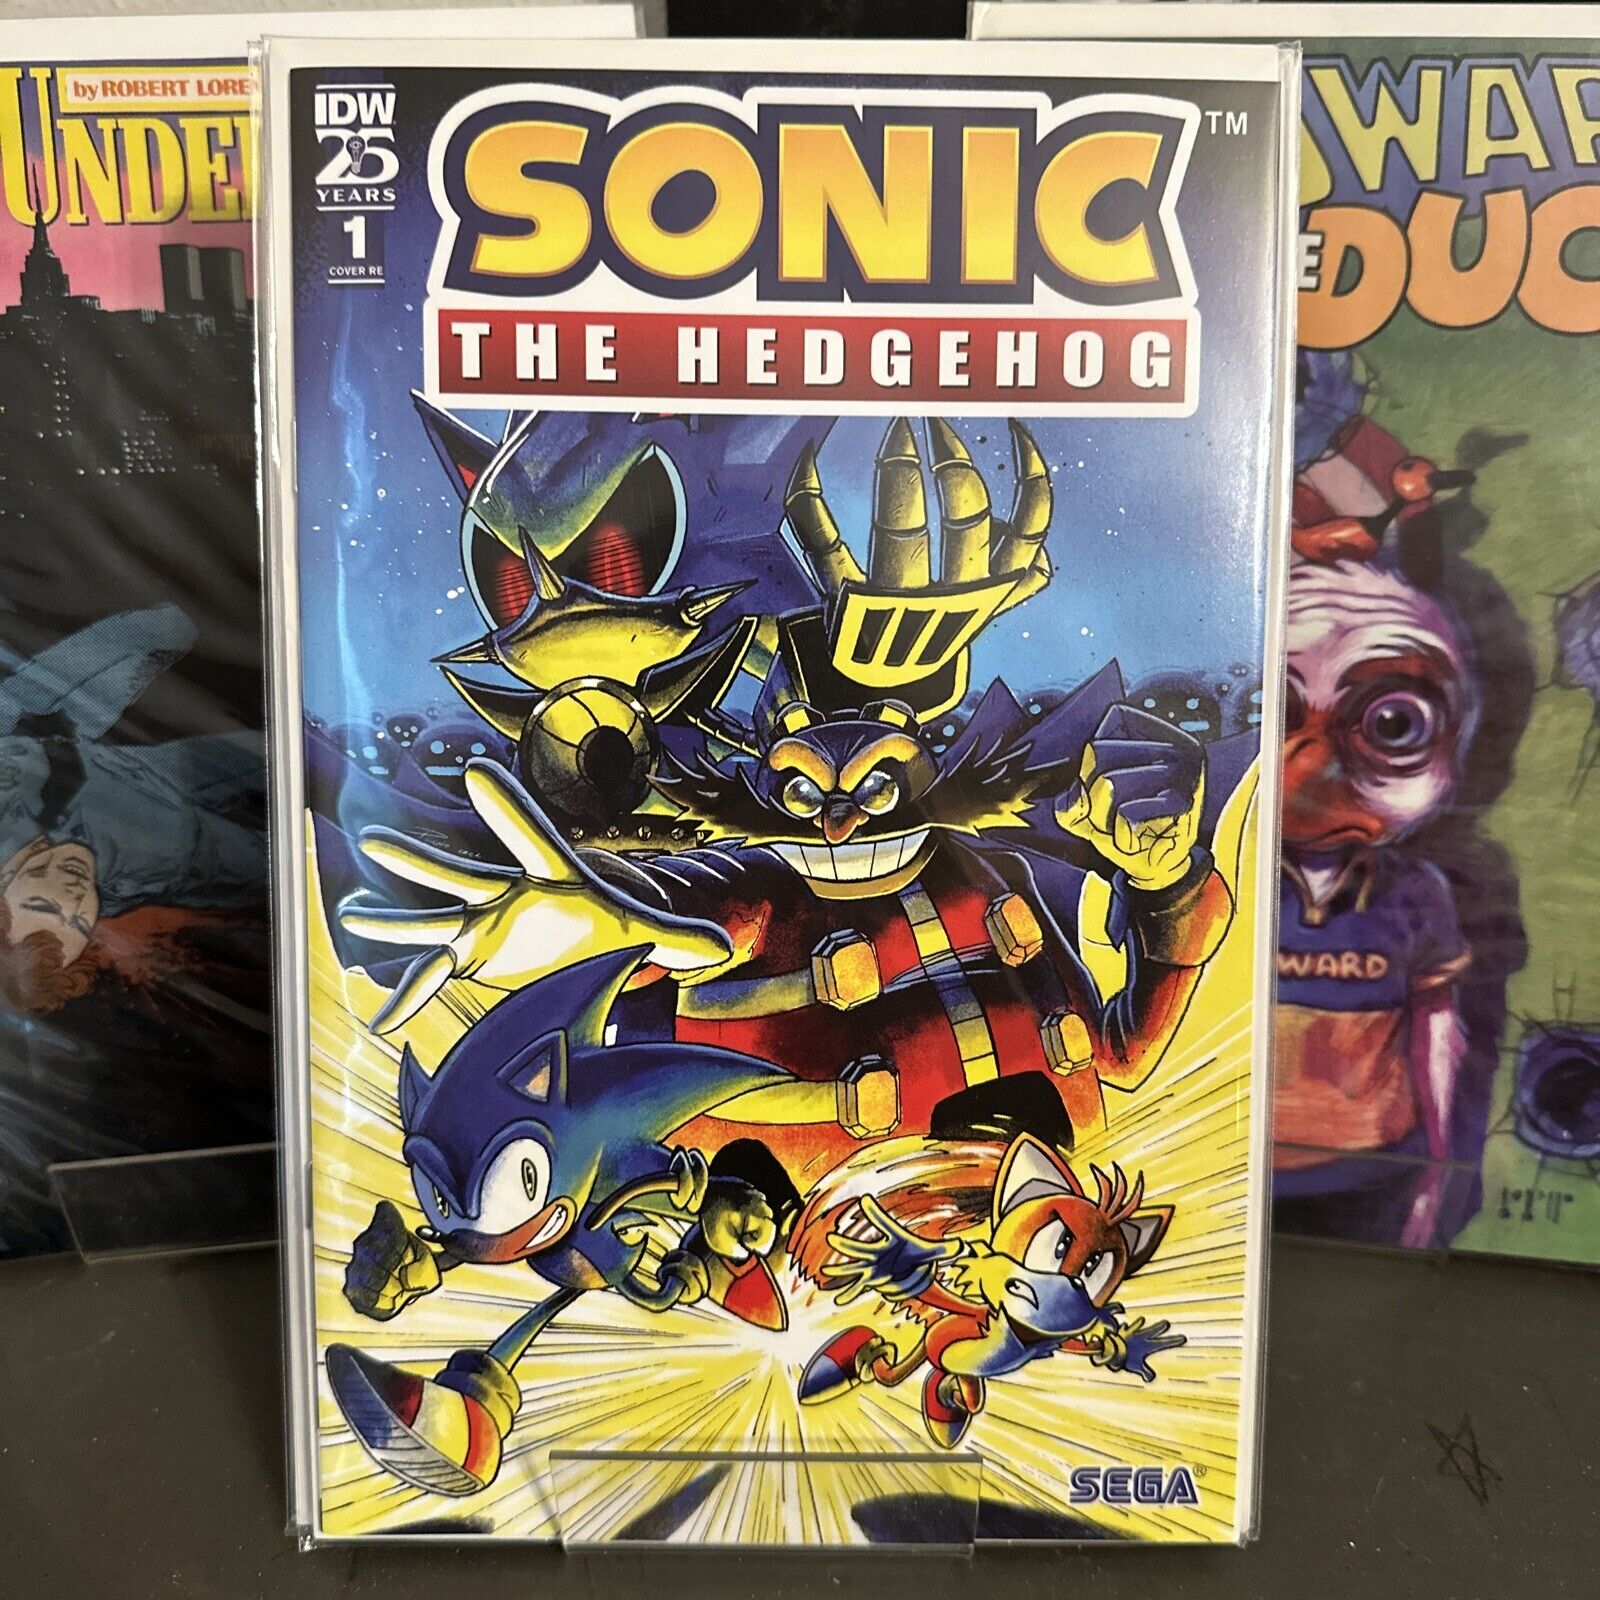 Sonic The Hedgehog #1 C2E2 Stashhh Loot Exclusive Poncho Variant IDW Publishing